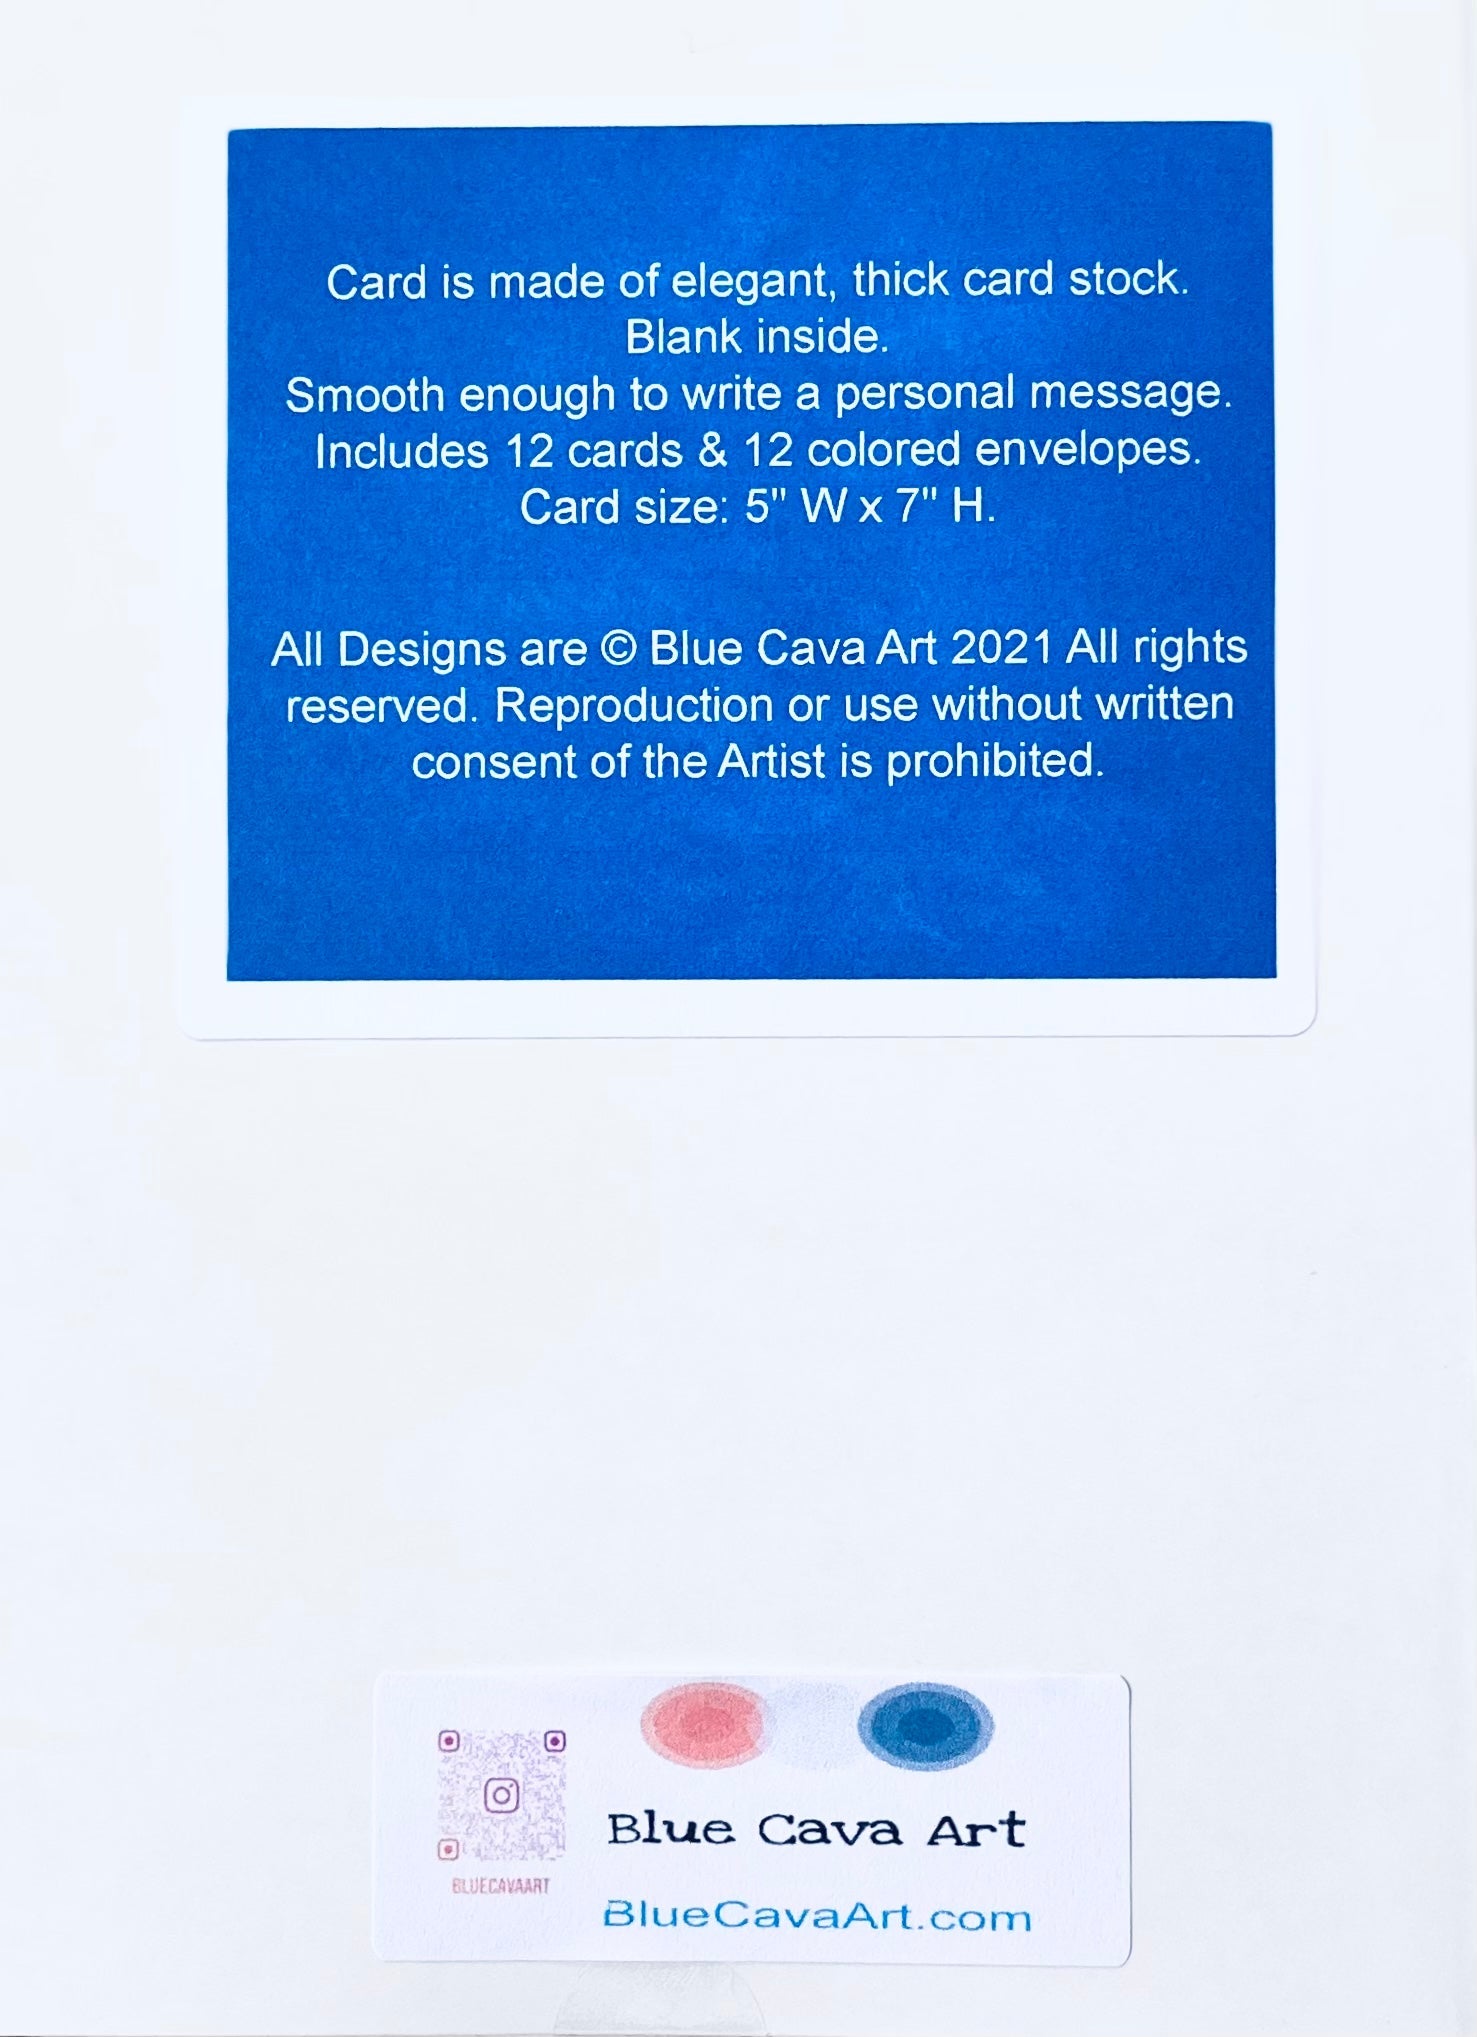 Blue Crab Greeting card - Blue Cava